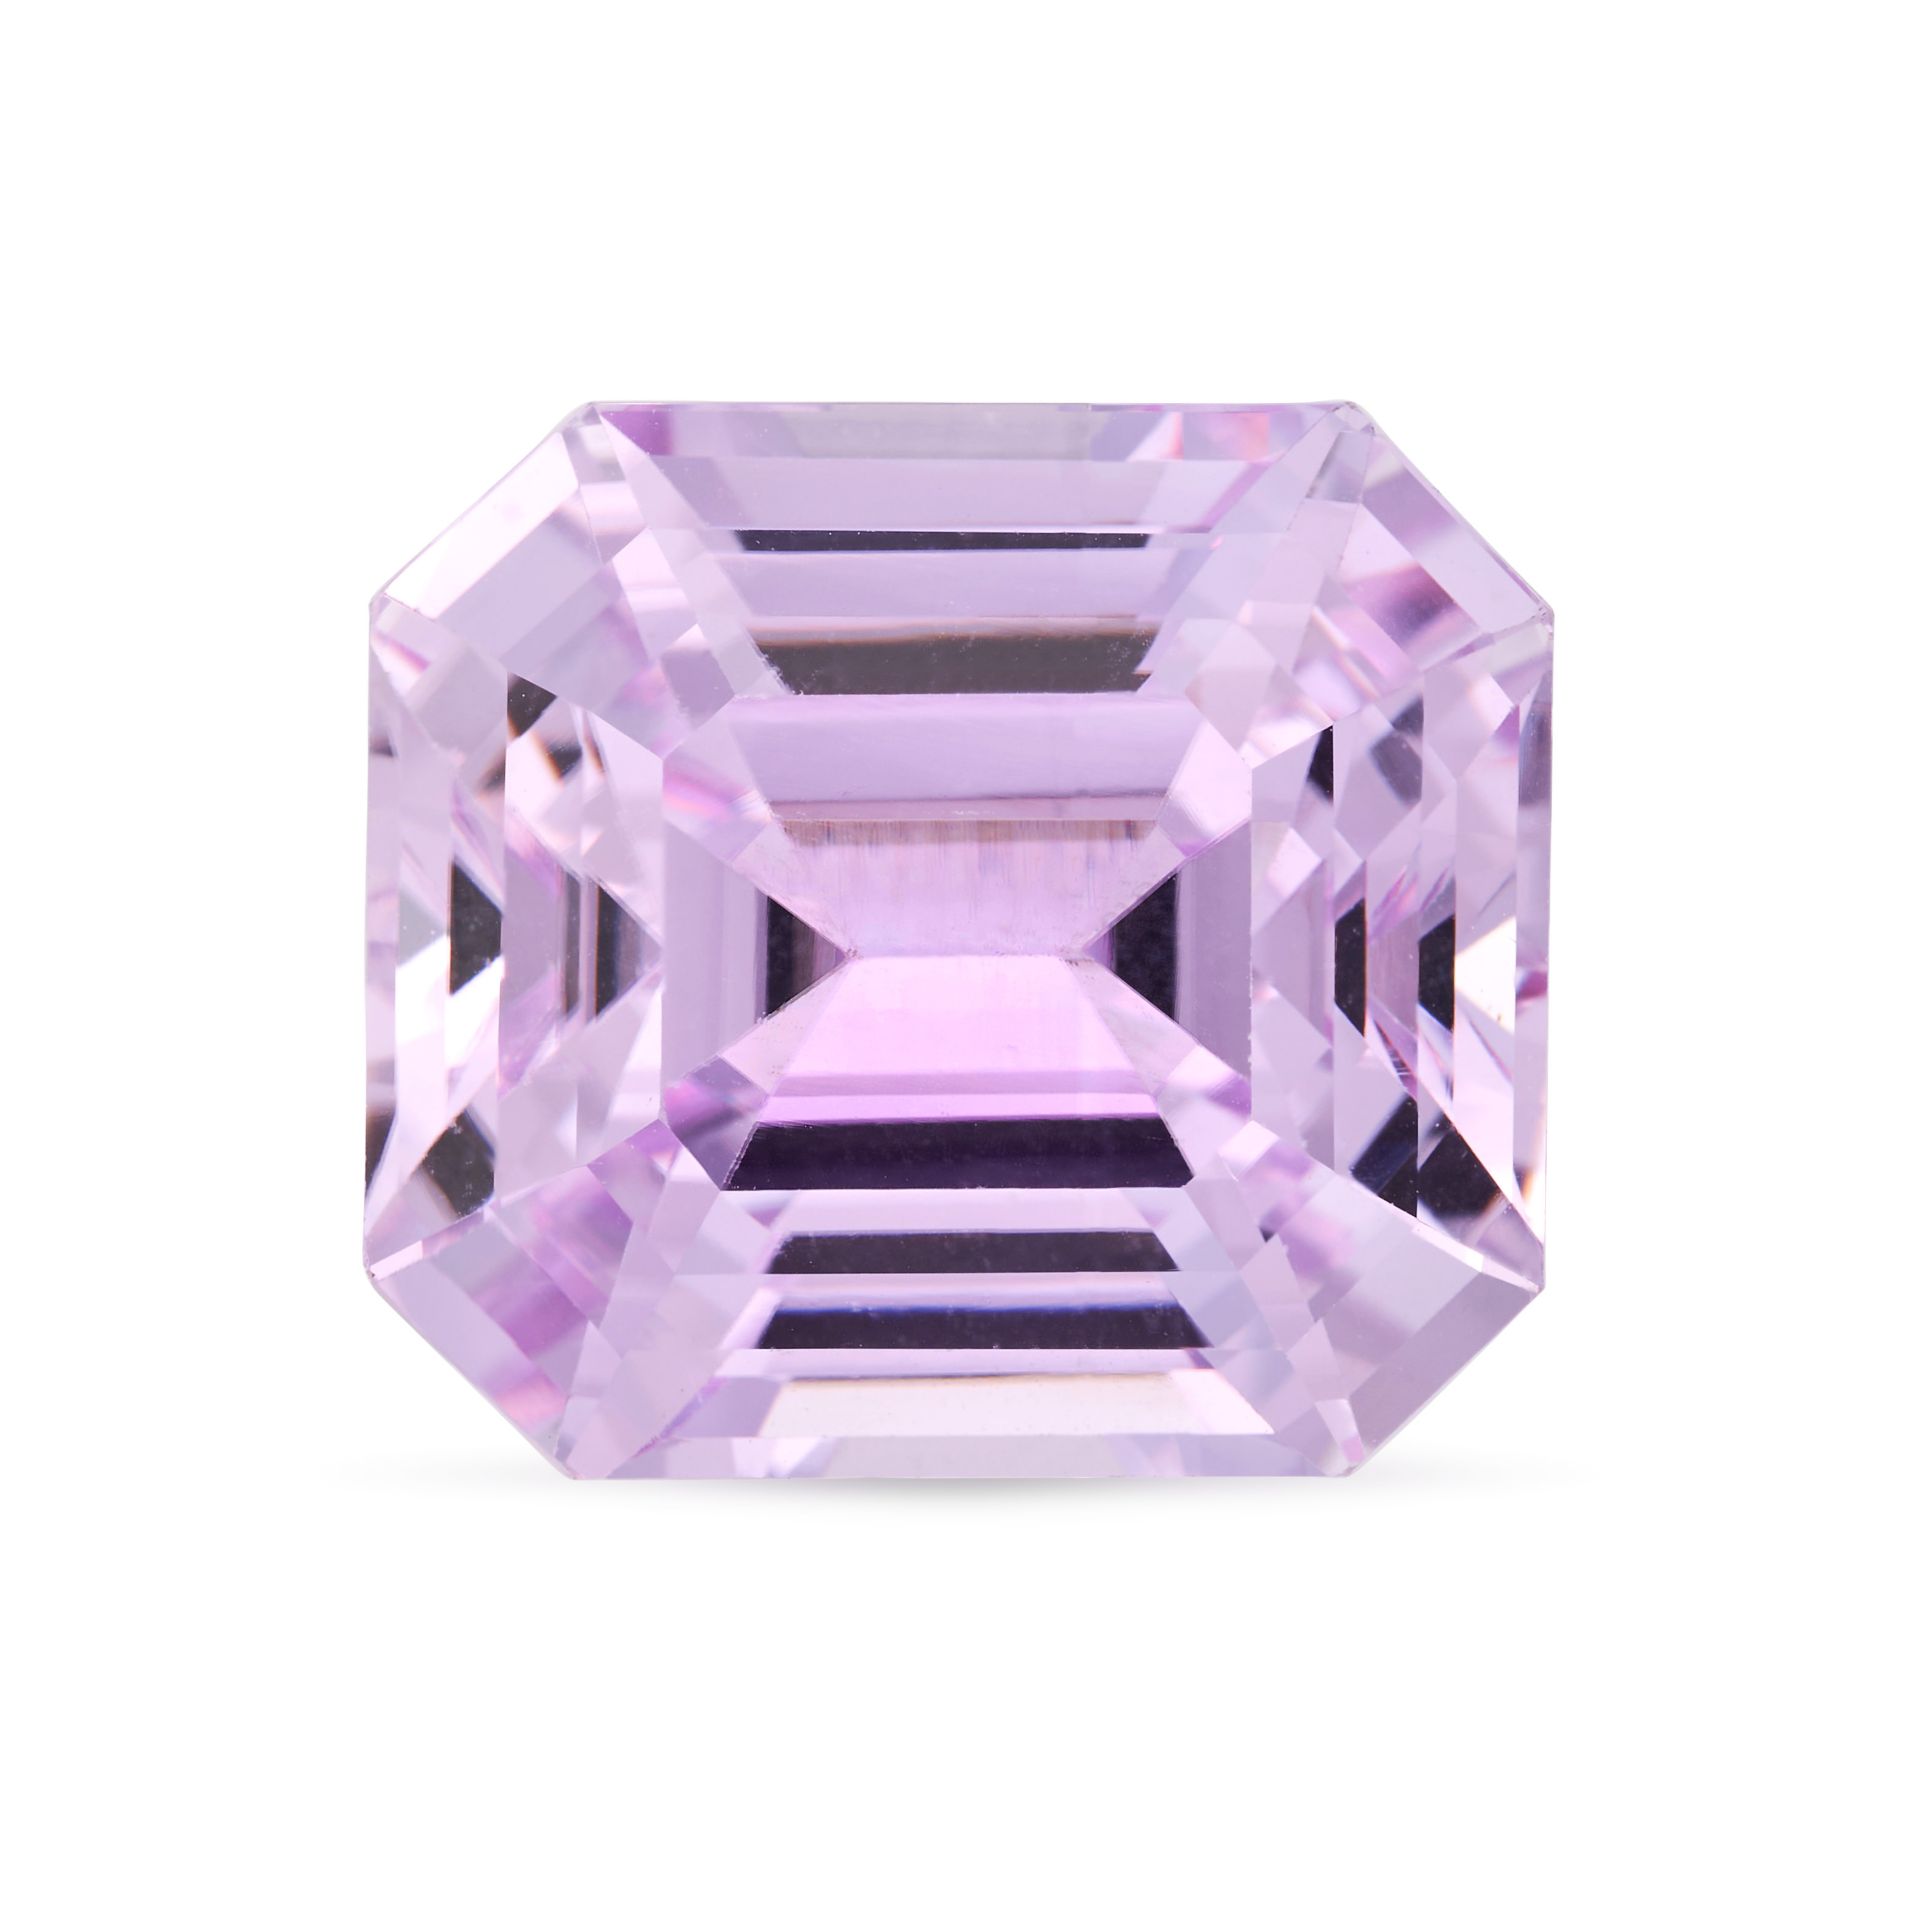 AN UNMOUNTED KUNZITE octagonal step cut, 40.60 carats.